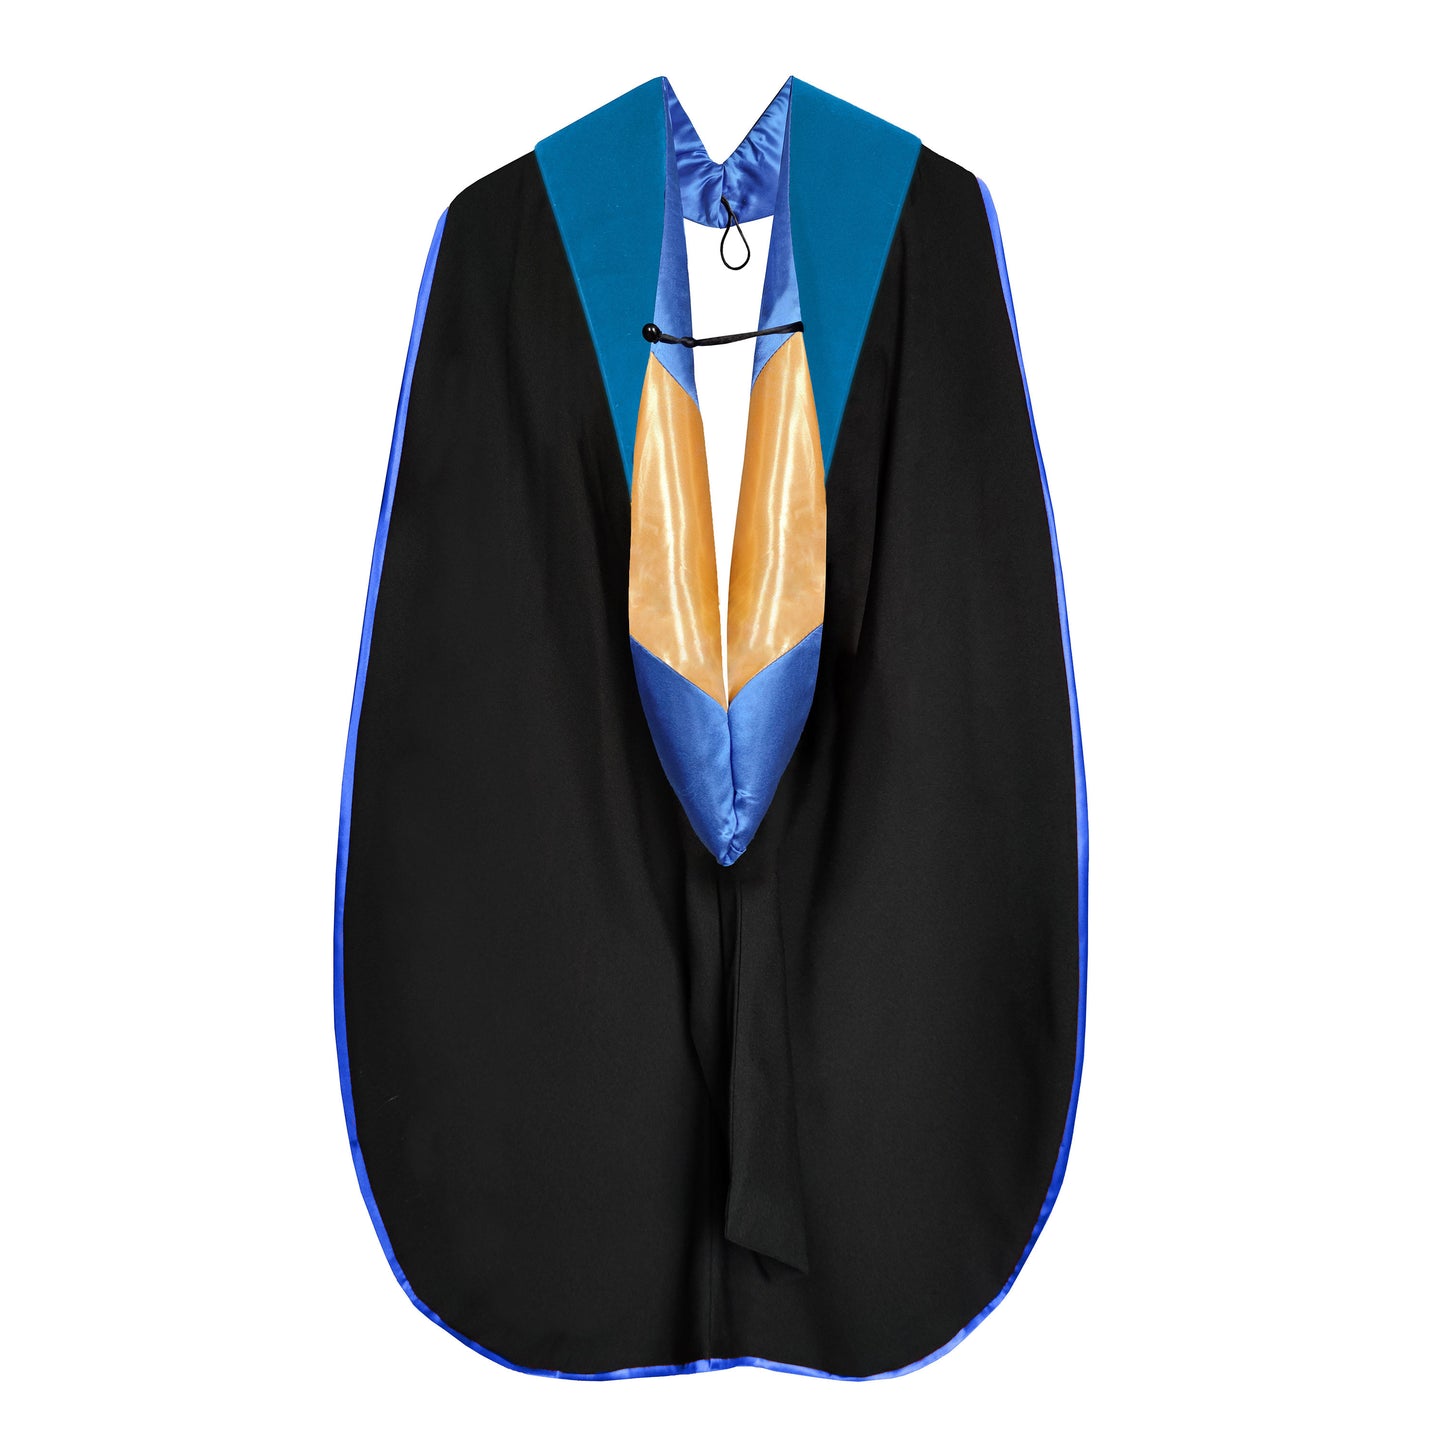 Classic Doctoral Graduation Hood for Various Degrees and Schools-CA graduation